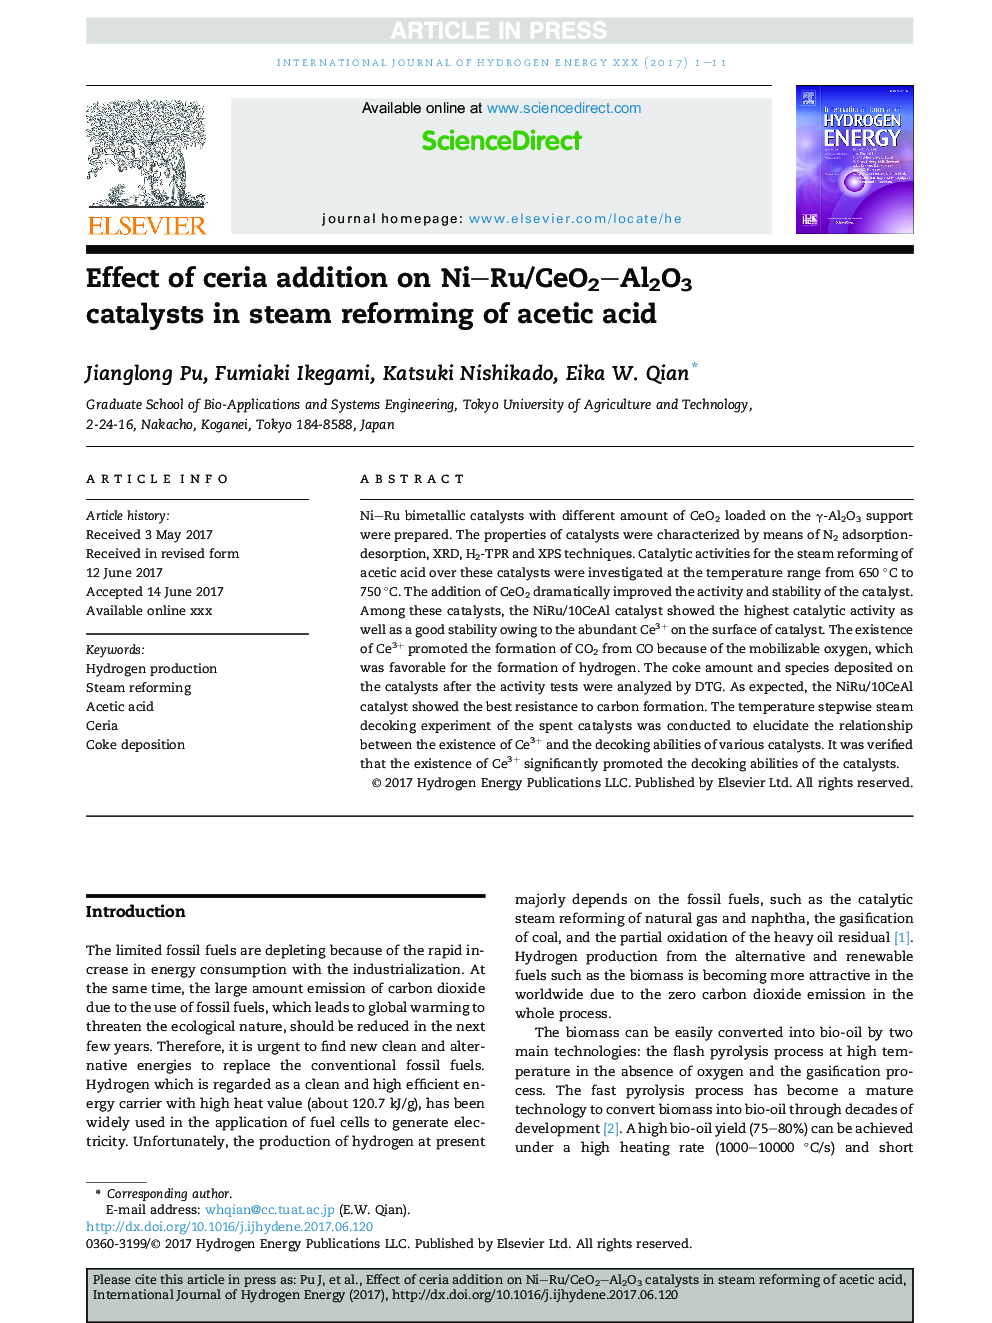 Effect of ceria addition on NiRu/CeO2Al2O3 catalysts in steam reforming of acetic acid